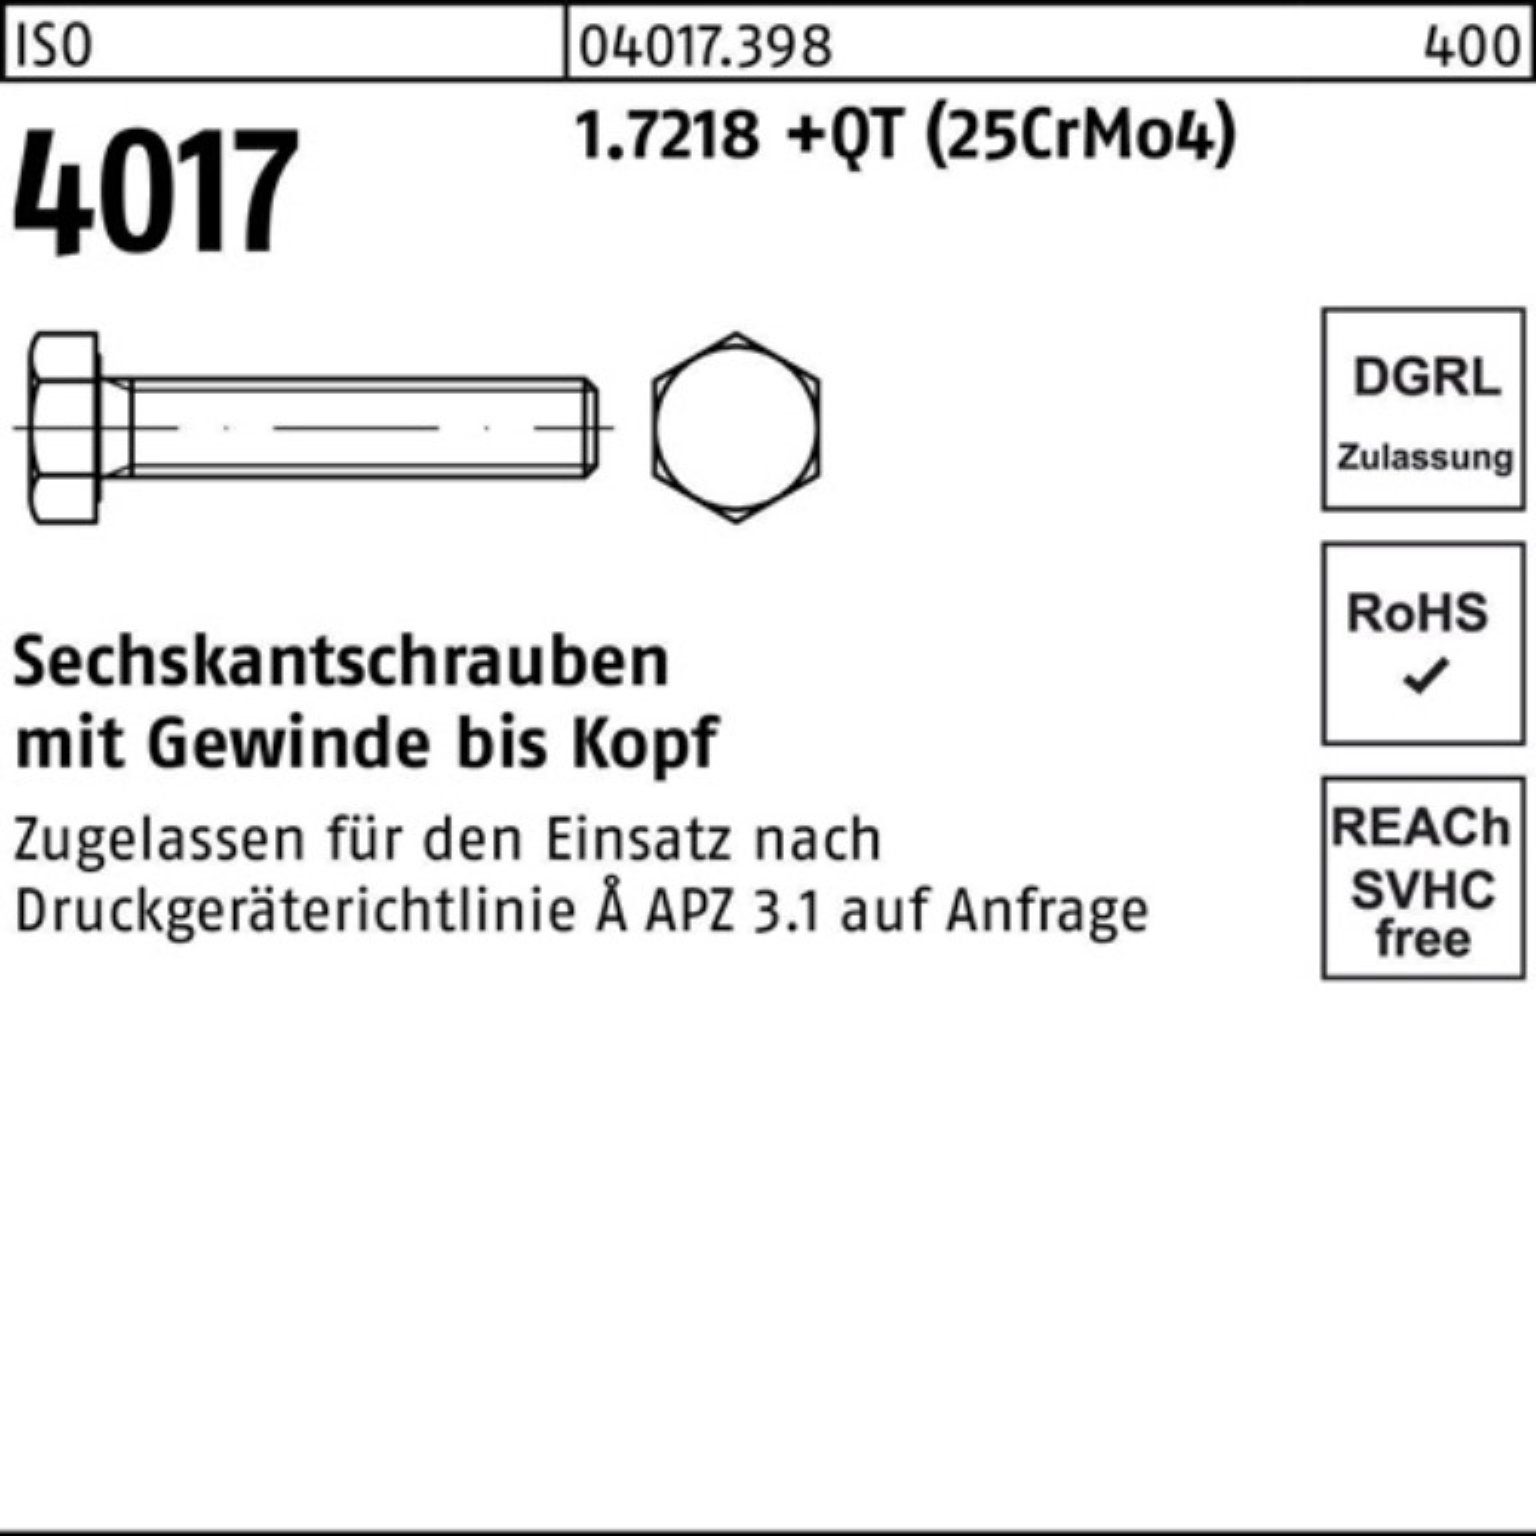 Bufab Sechskantschraube 100er M24x ISO 4017 120 (25CrMo4) +QT Pack 1.7218 Sechskantschraube VG